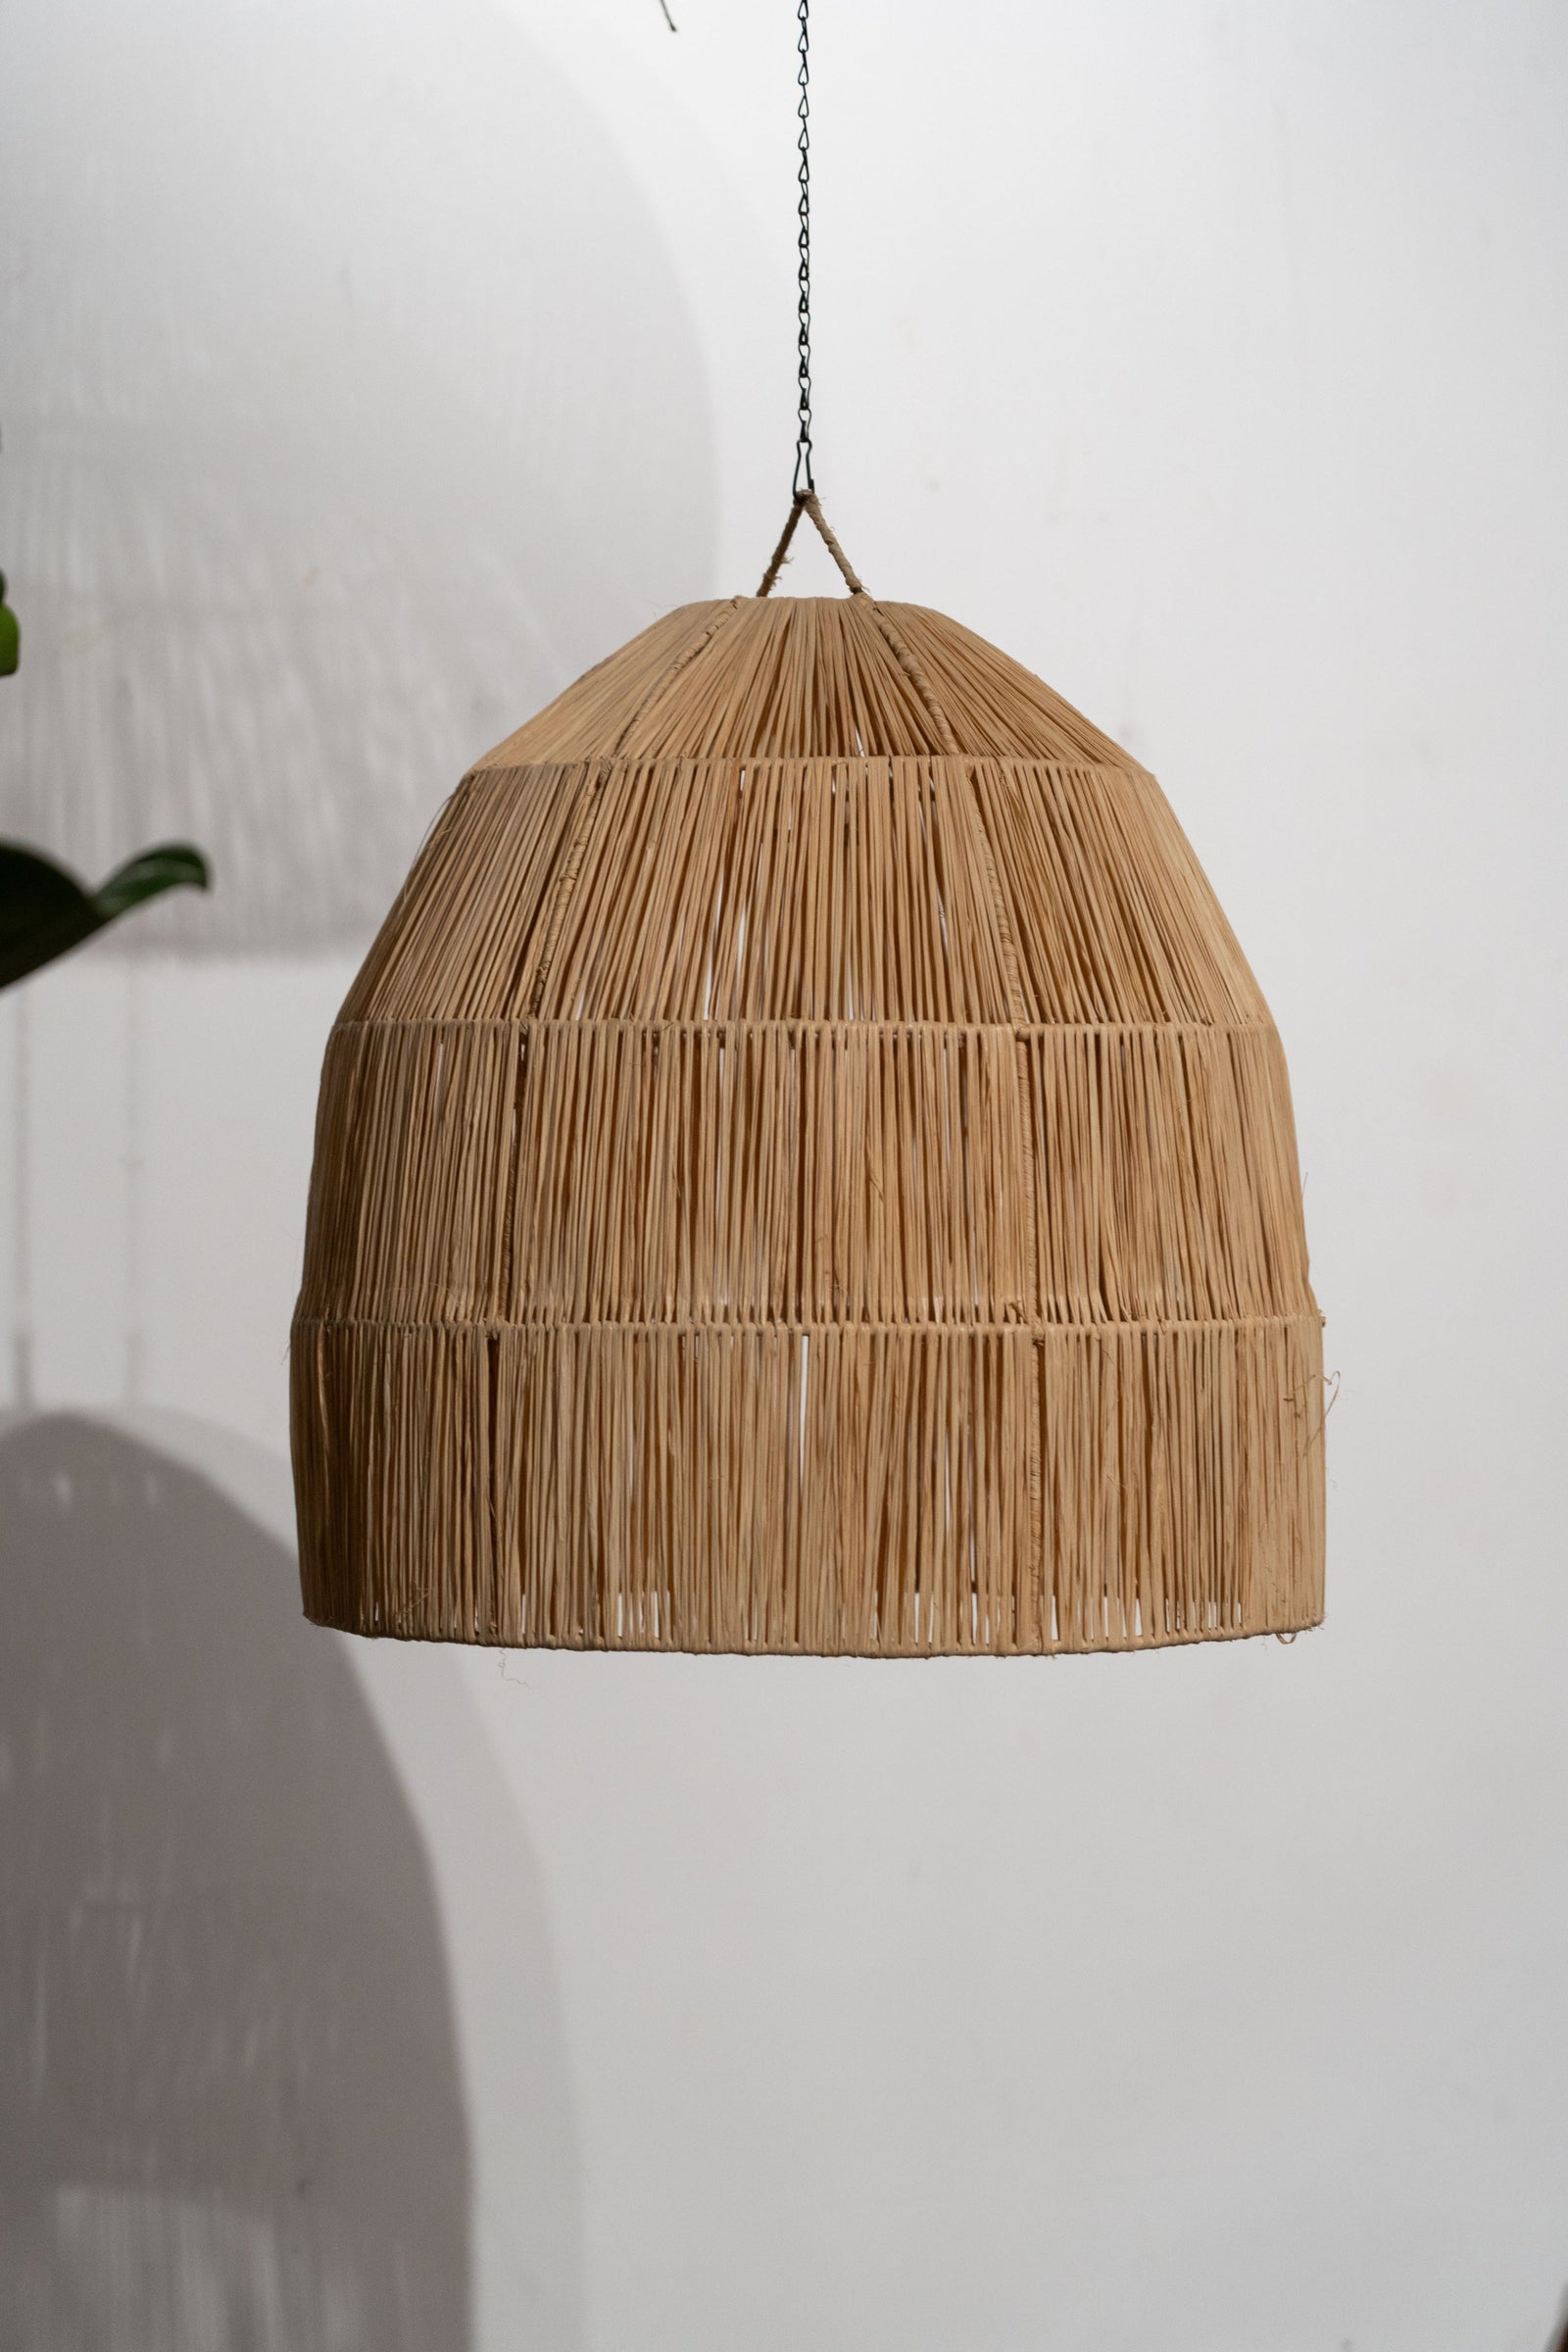 Moroco Jute Hand Woven Lamp Shade - L